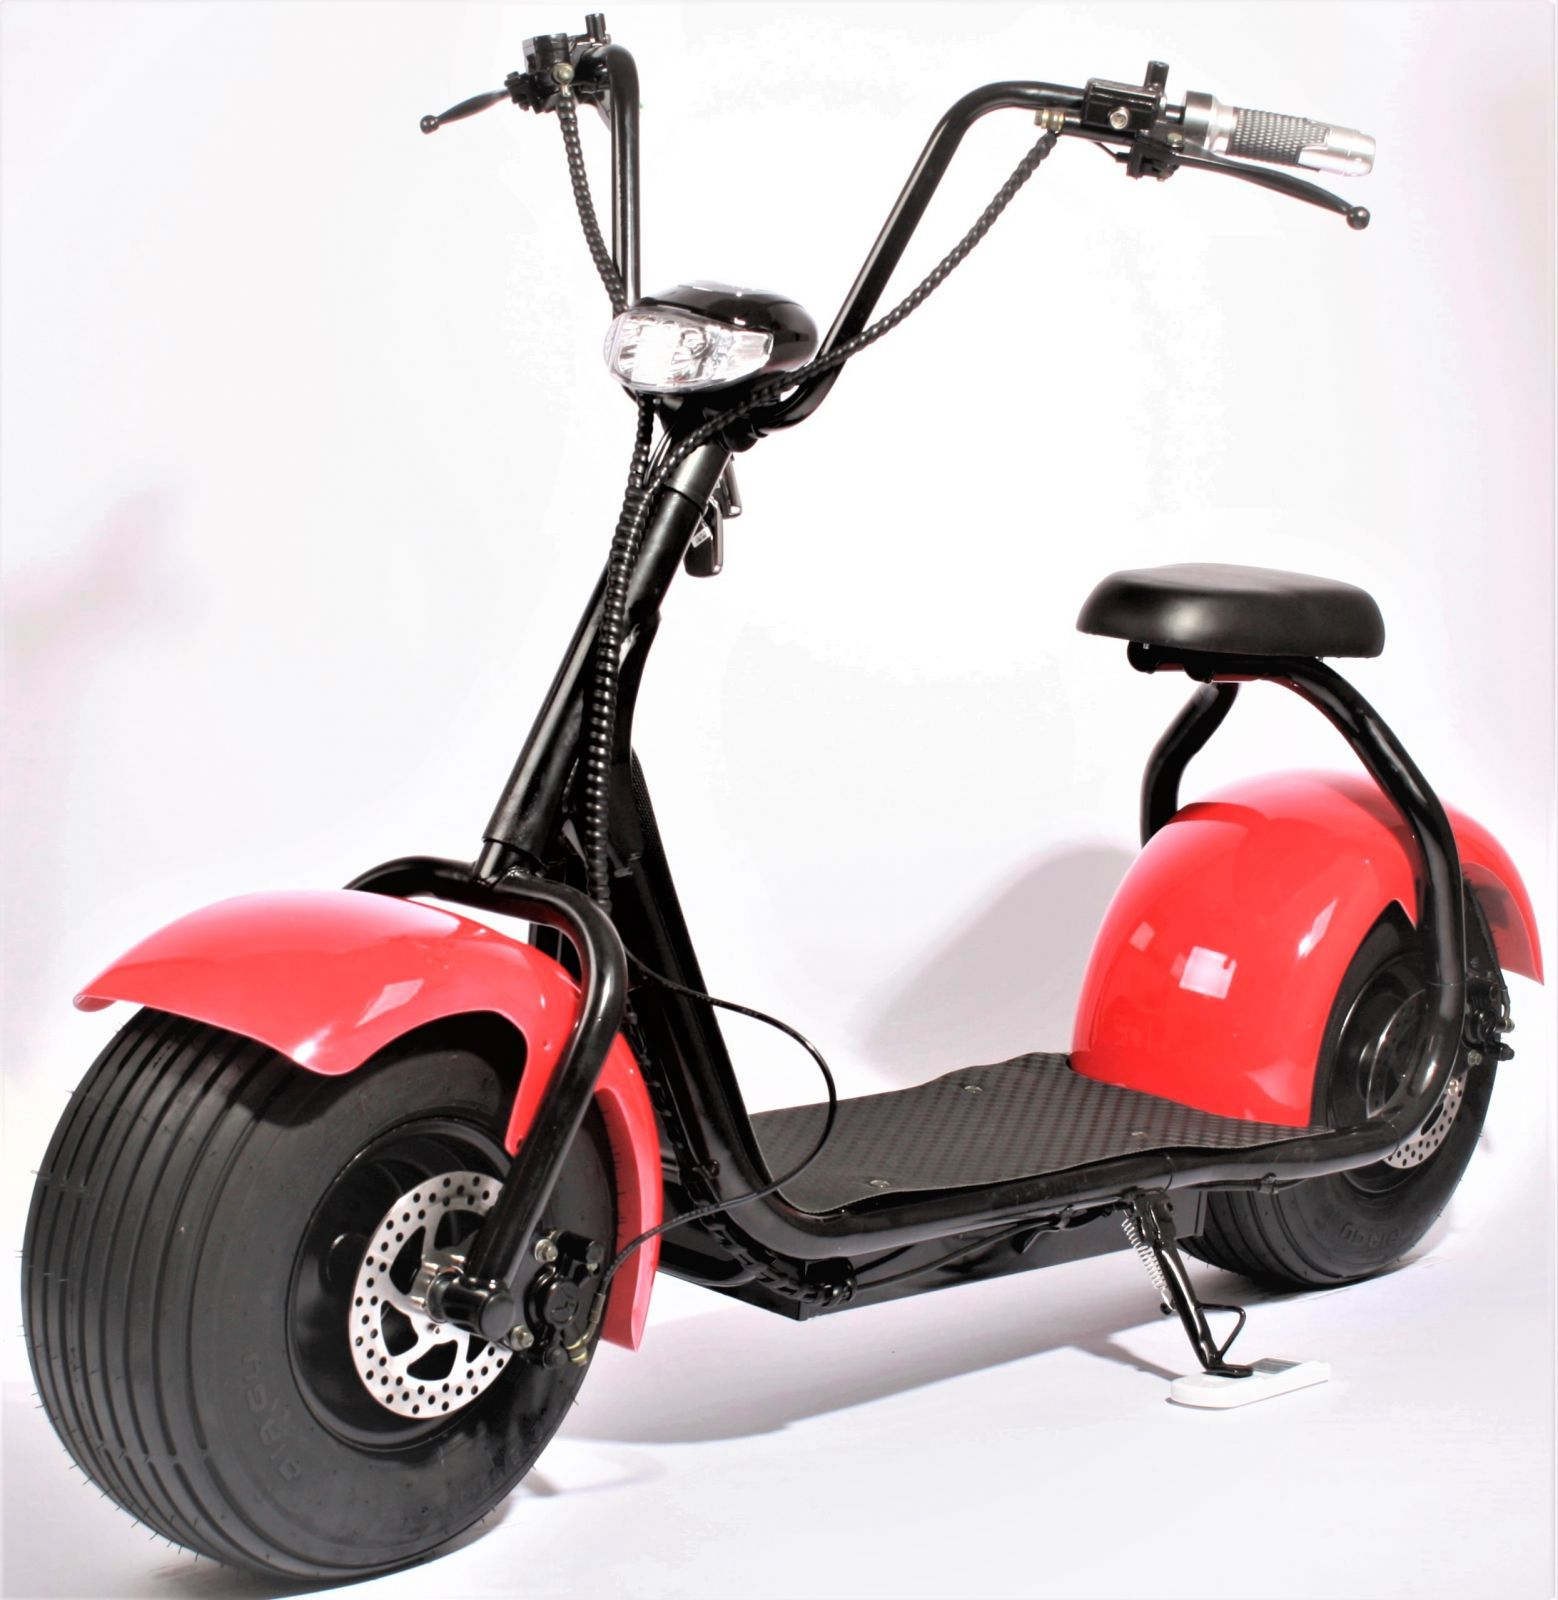 RCskladem ECO HIGHWAY scooter 1000W ARTR 1:1 A290red röd